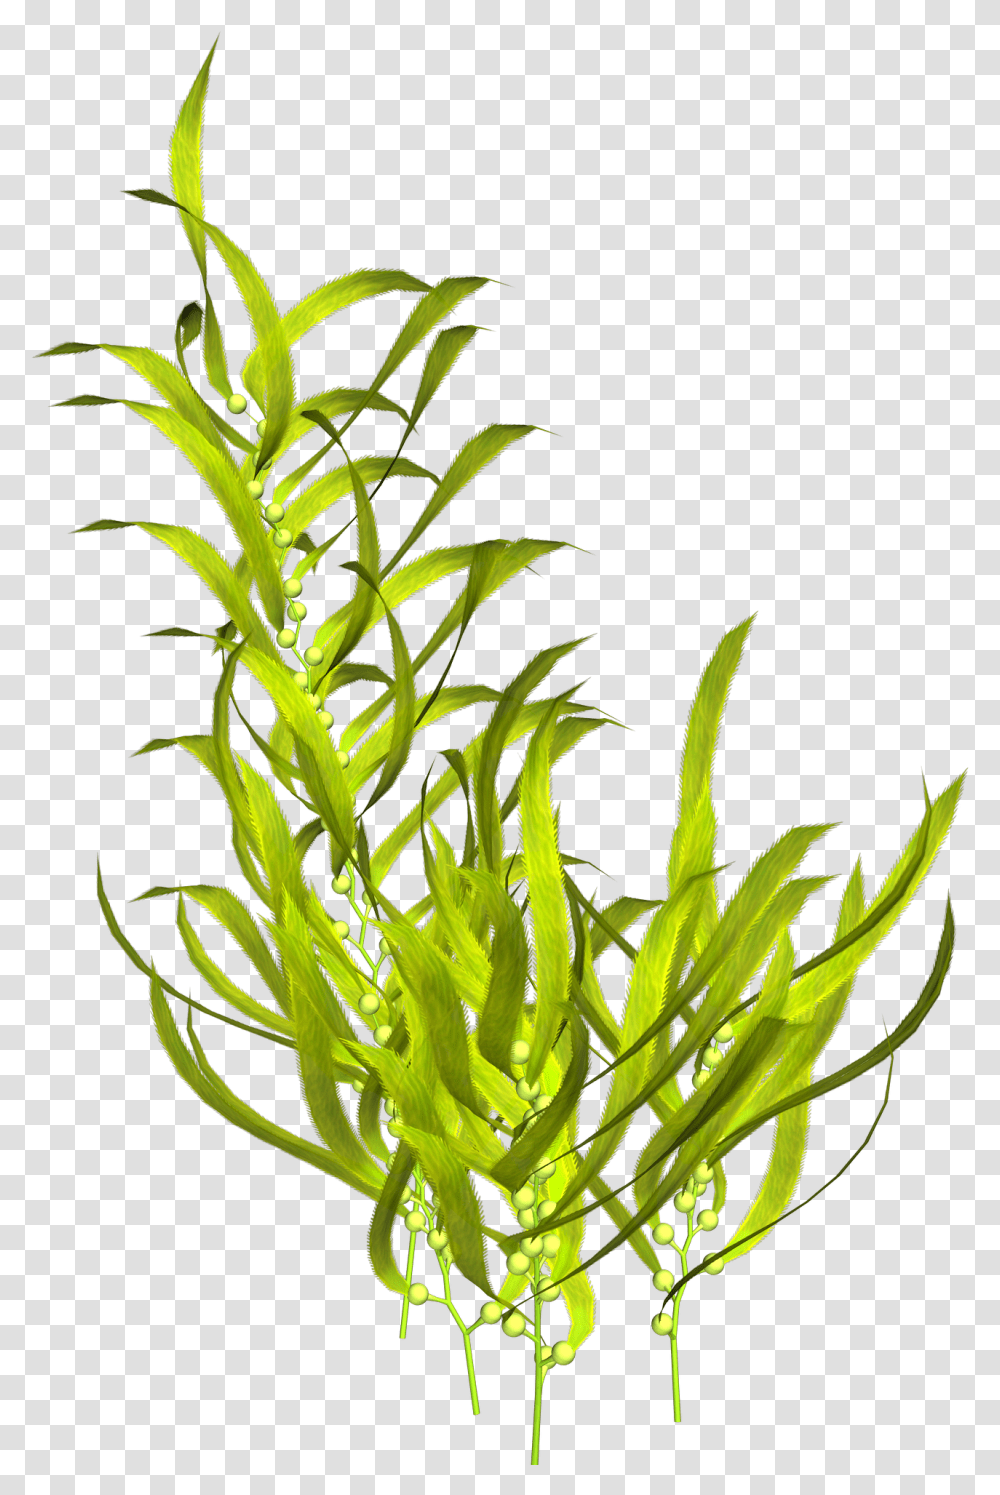 Seaweed Aquatic Plants Clip Art Seaweed, Animal, Sea Life, Invertebrate, Sea Anemone Transparent Png